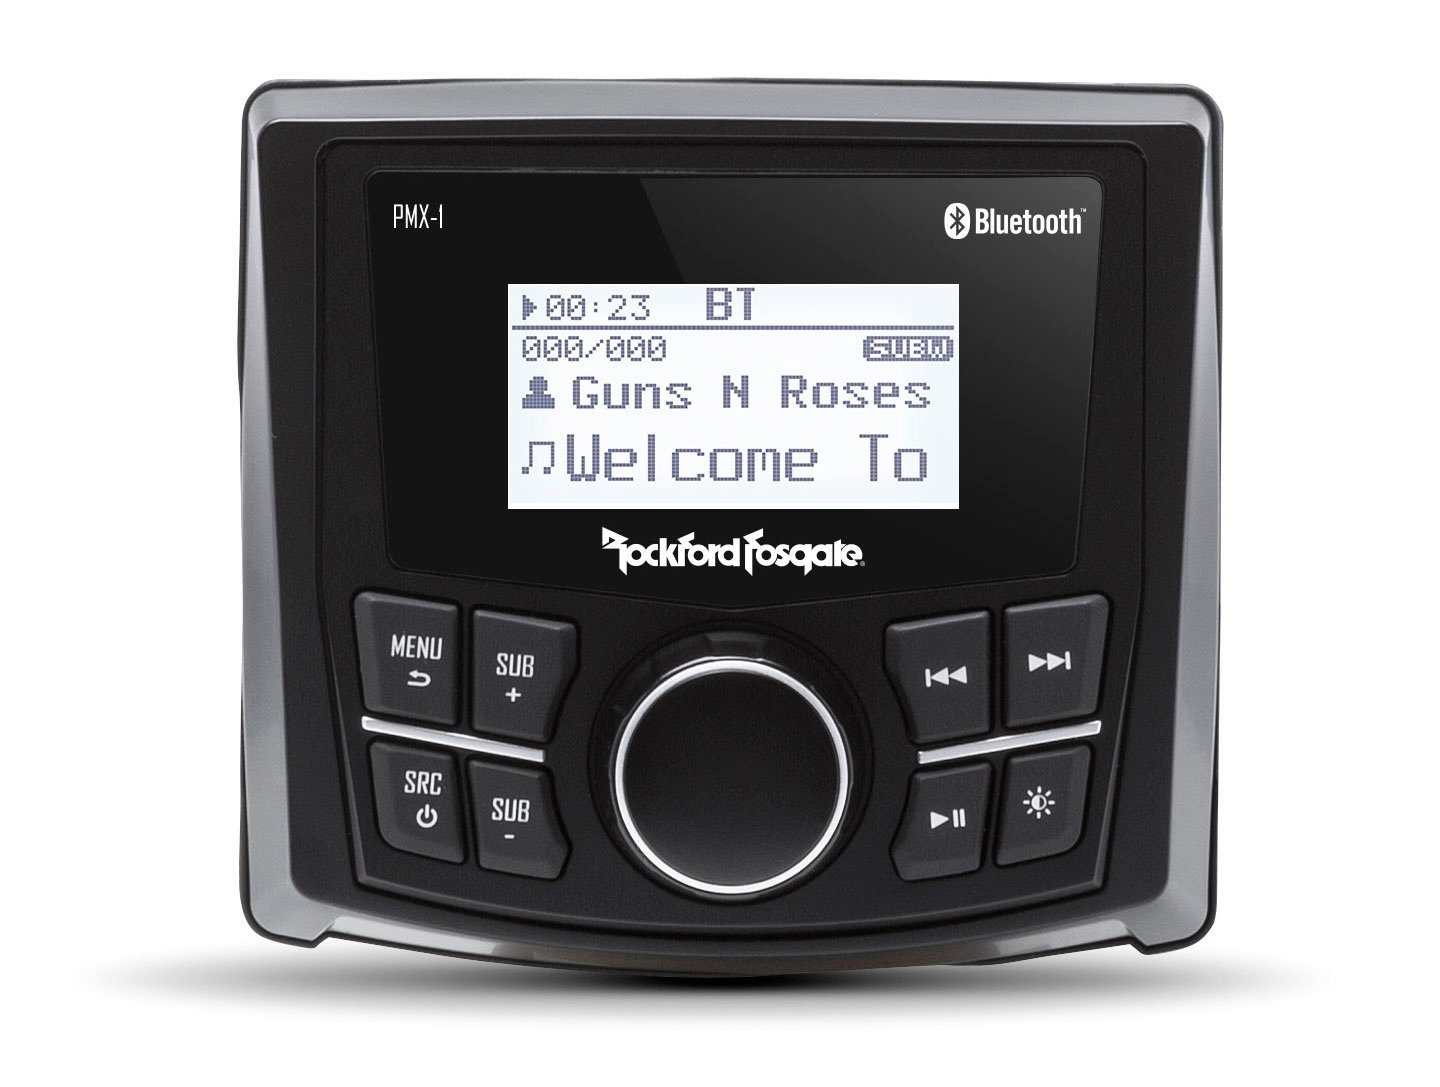 Rockford Fosgate Headunit Marineradio für Boot Autoradio